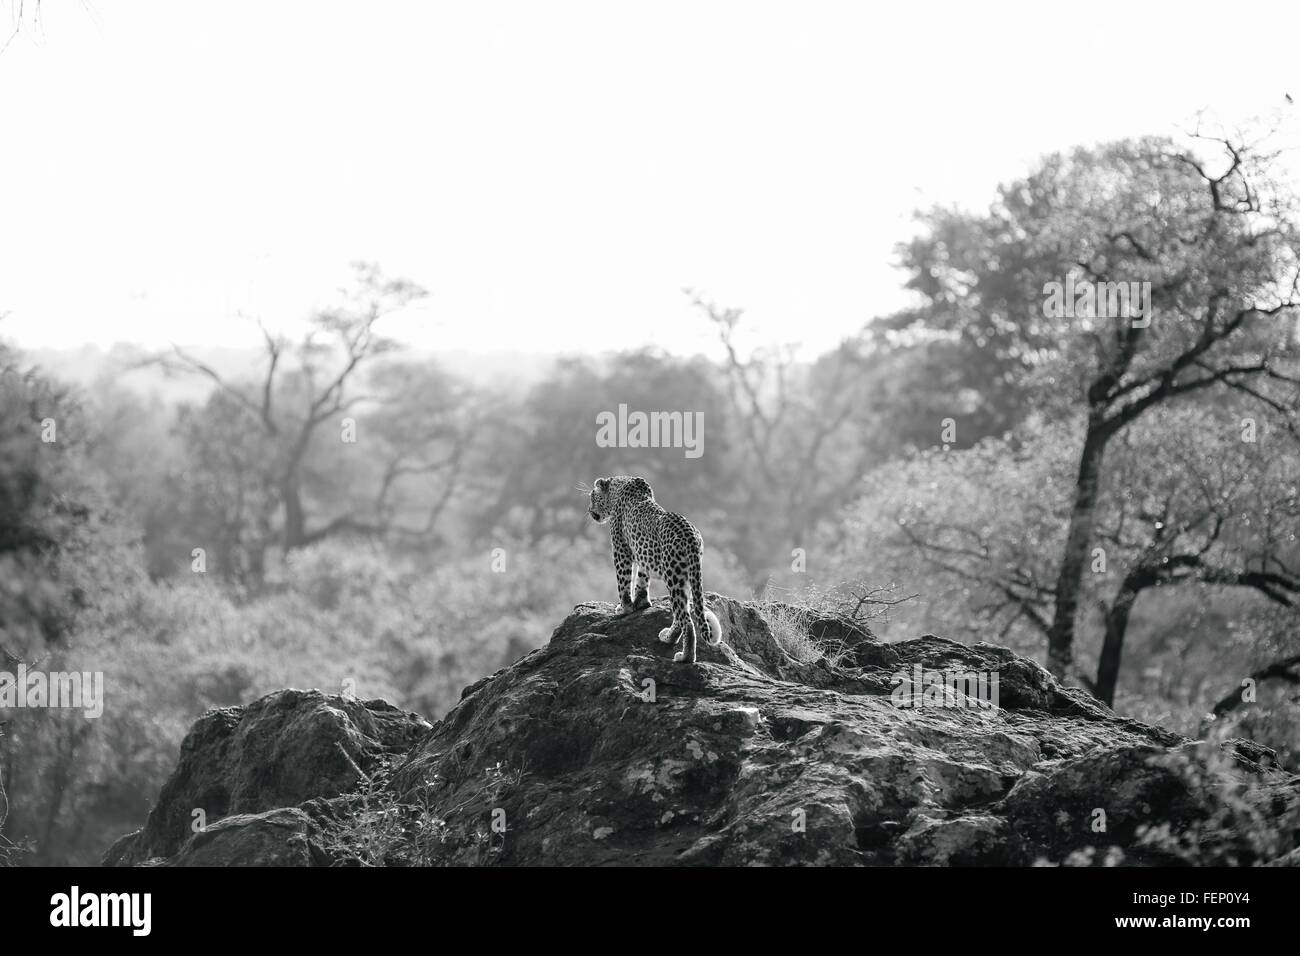 Leopard in African landscape, Kruger National Park, South Africa Stock Photo